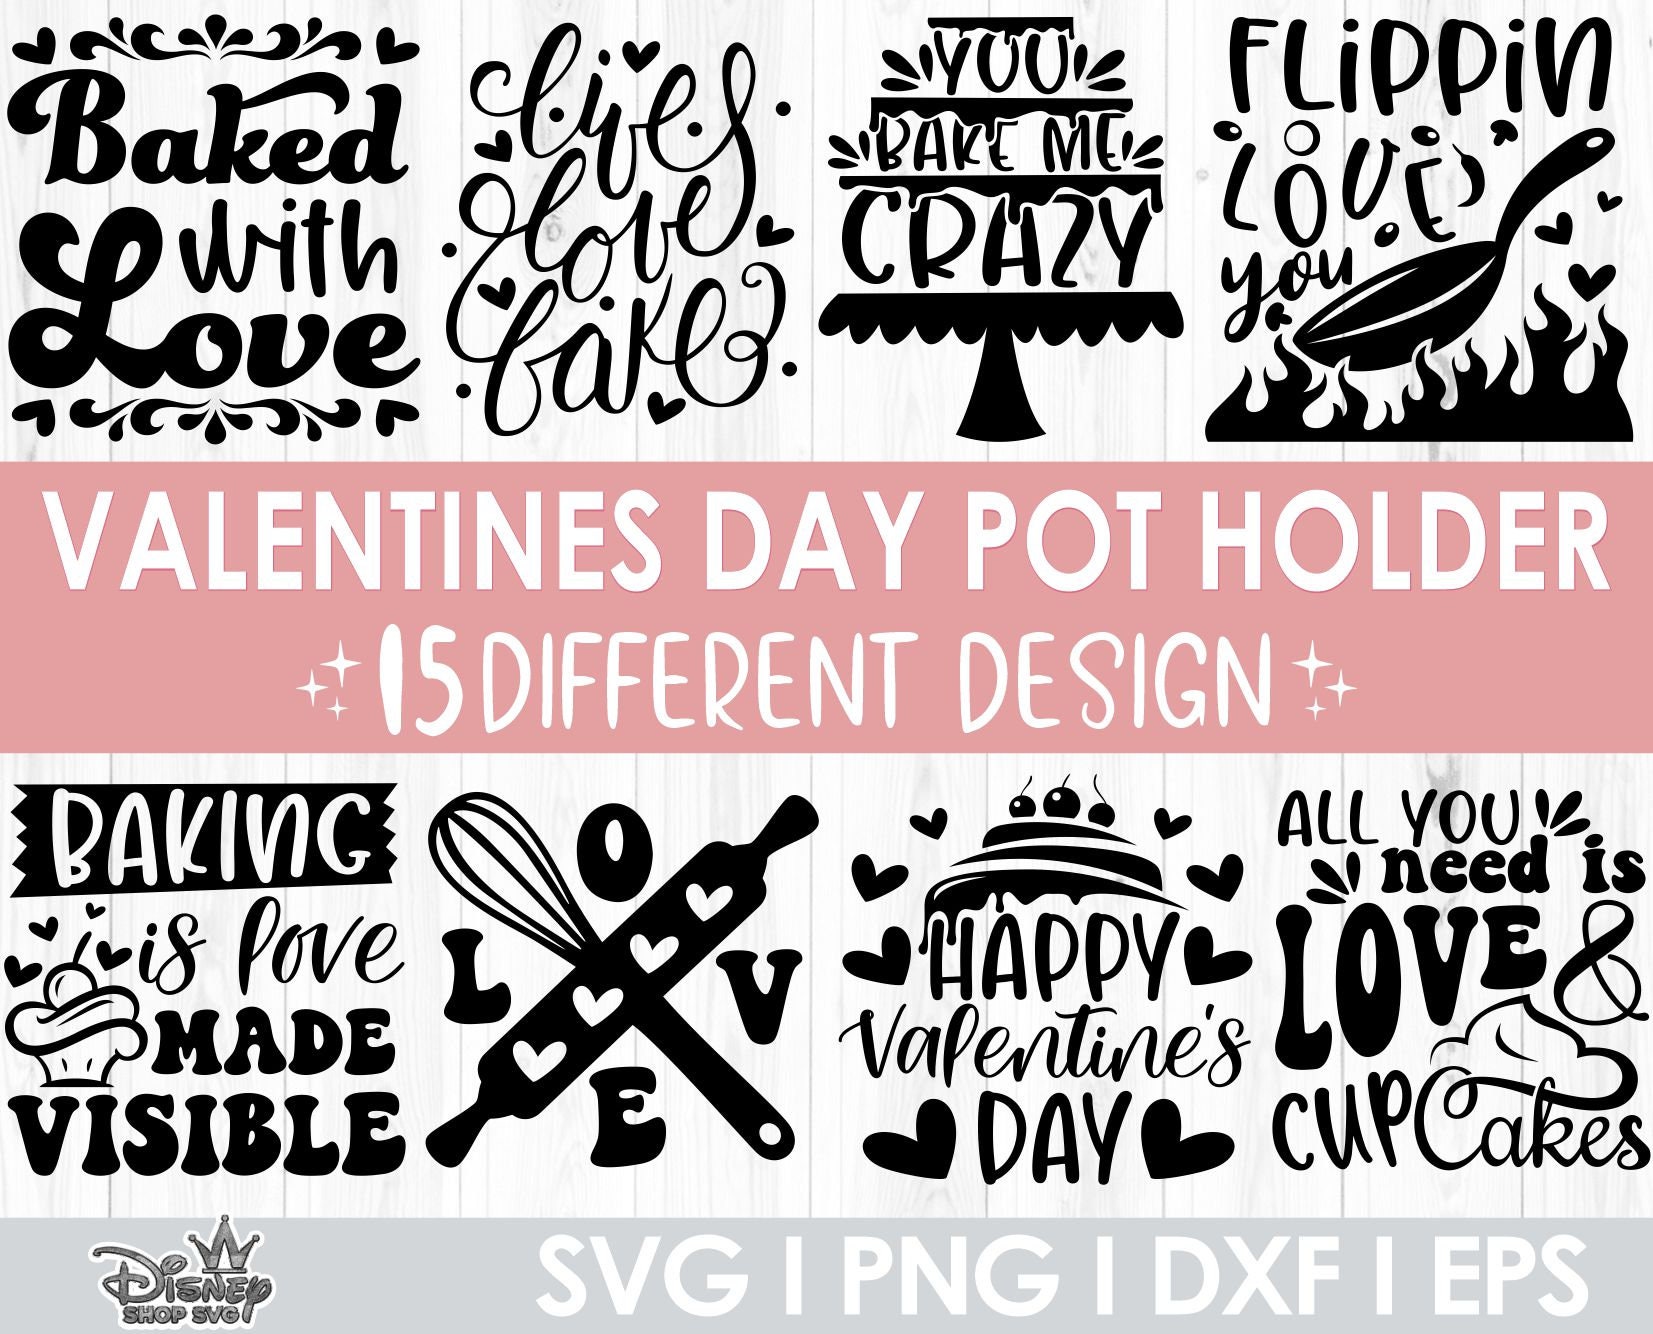 Cute Black Cat Love Oven Mitts & Pot Holders 2pcs Valentine Pink Hearts  Decorative Kitchen Heat Resistant Non-Slip Potholders Set for Women Cooking